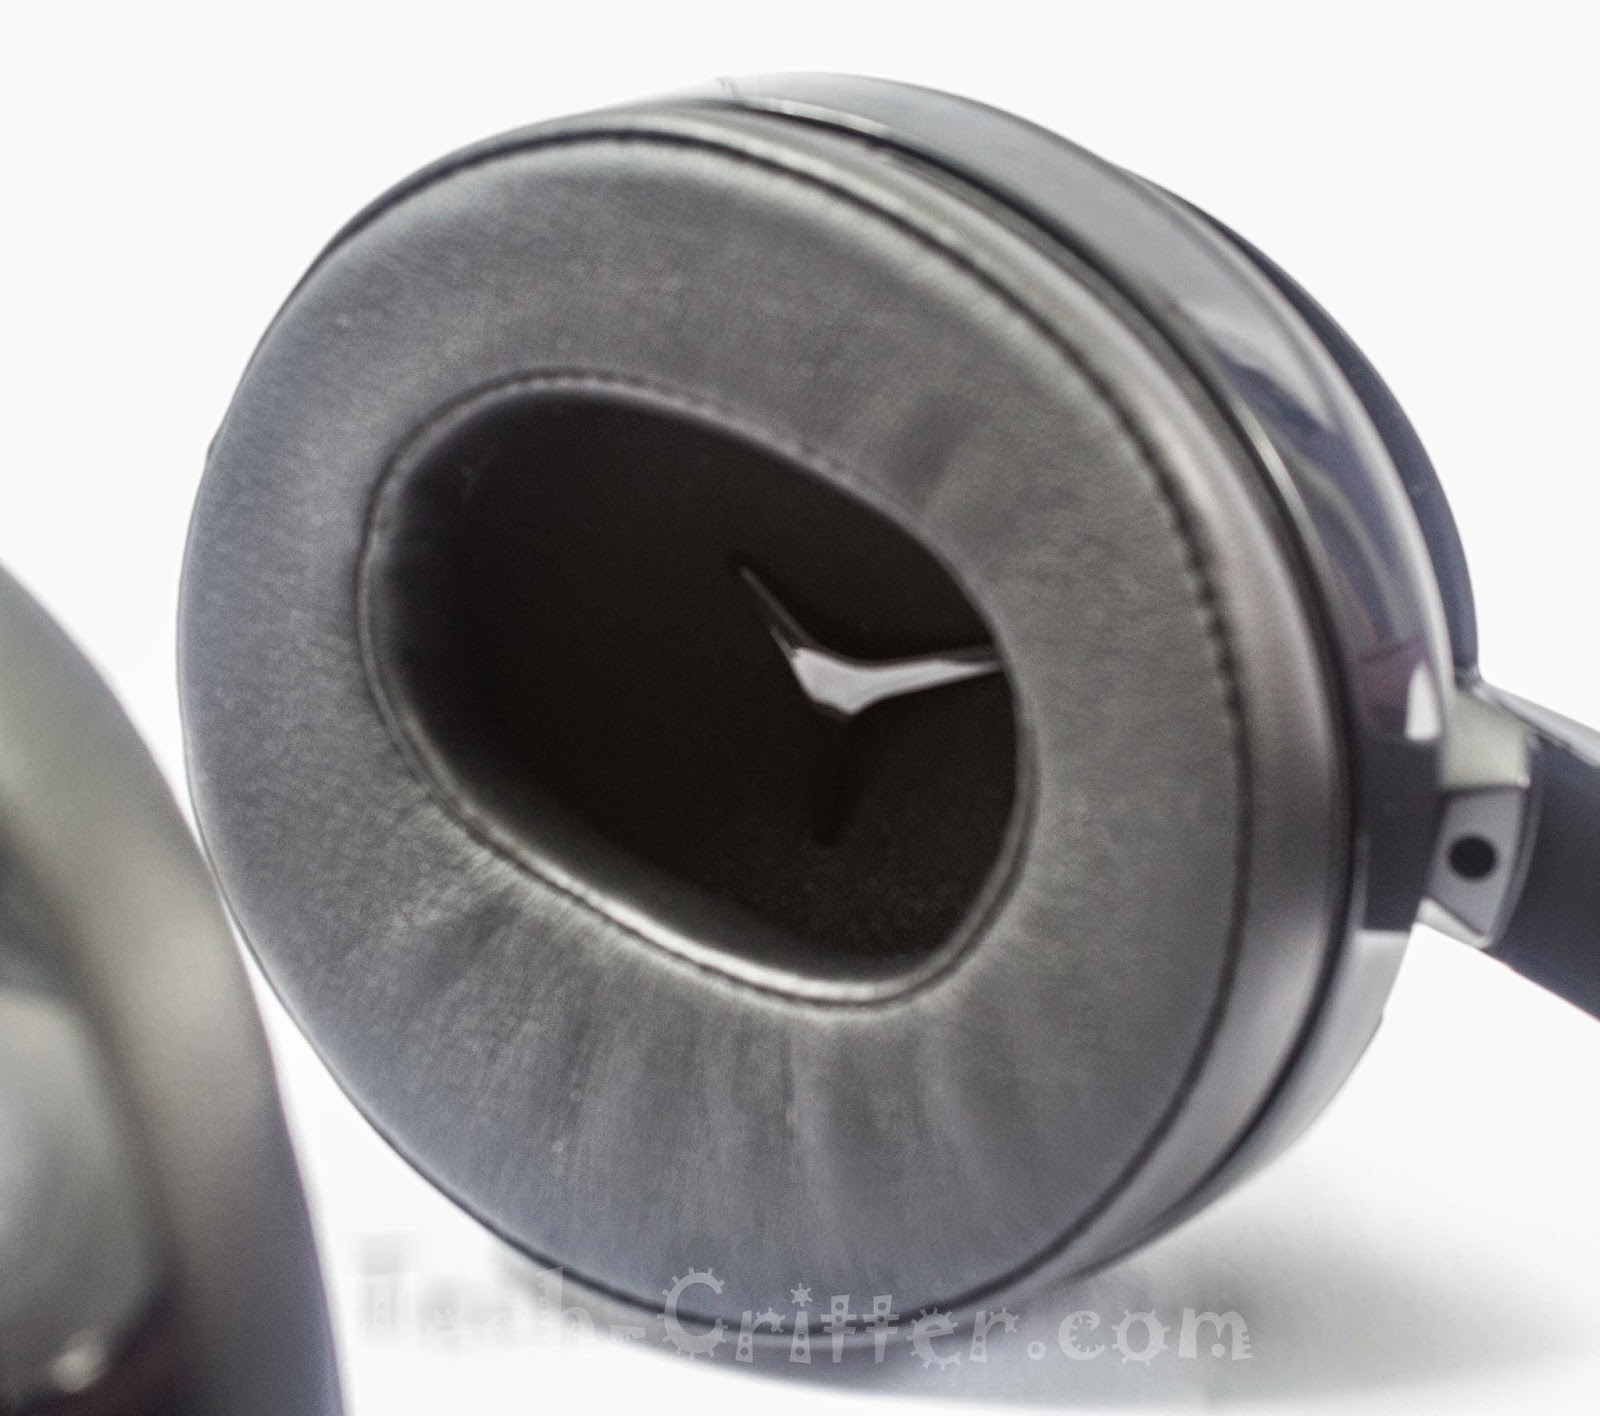 Unboxing & Review: Roccat Kave XTD 5.1 Digital Surround Sound Headset 138